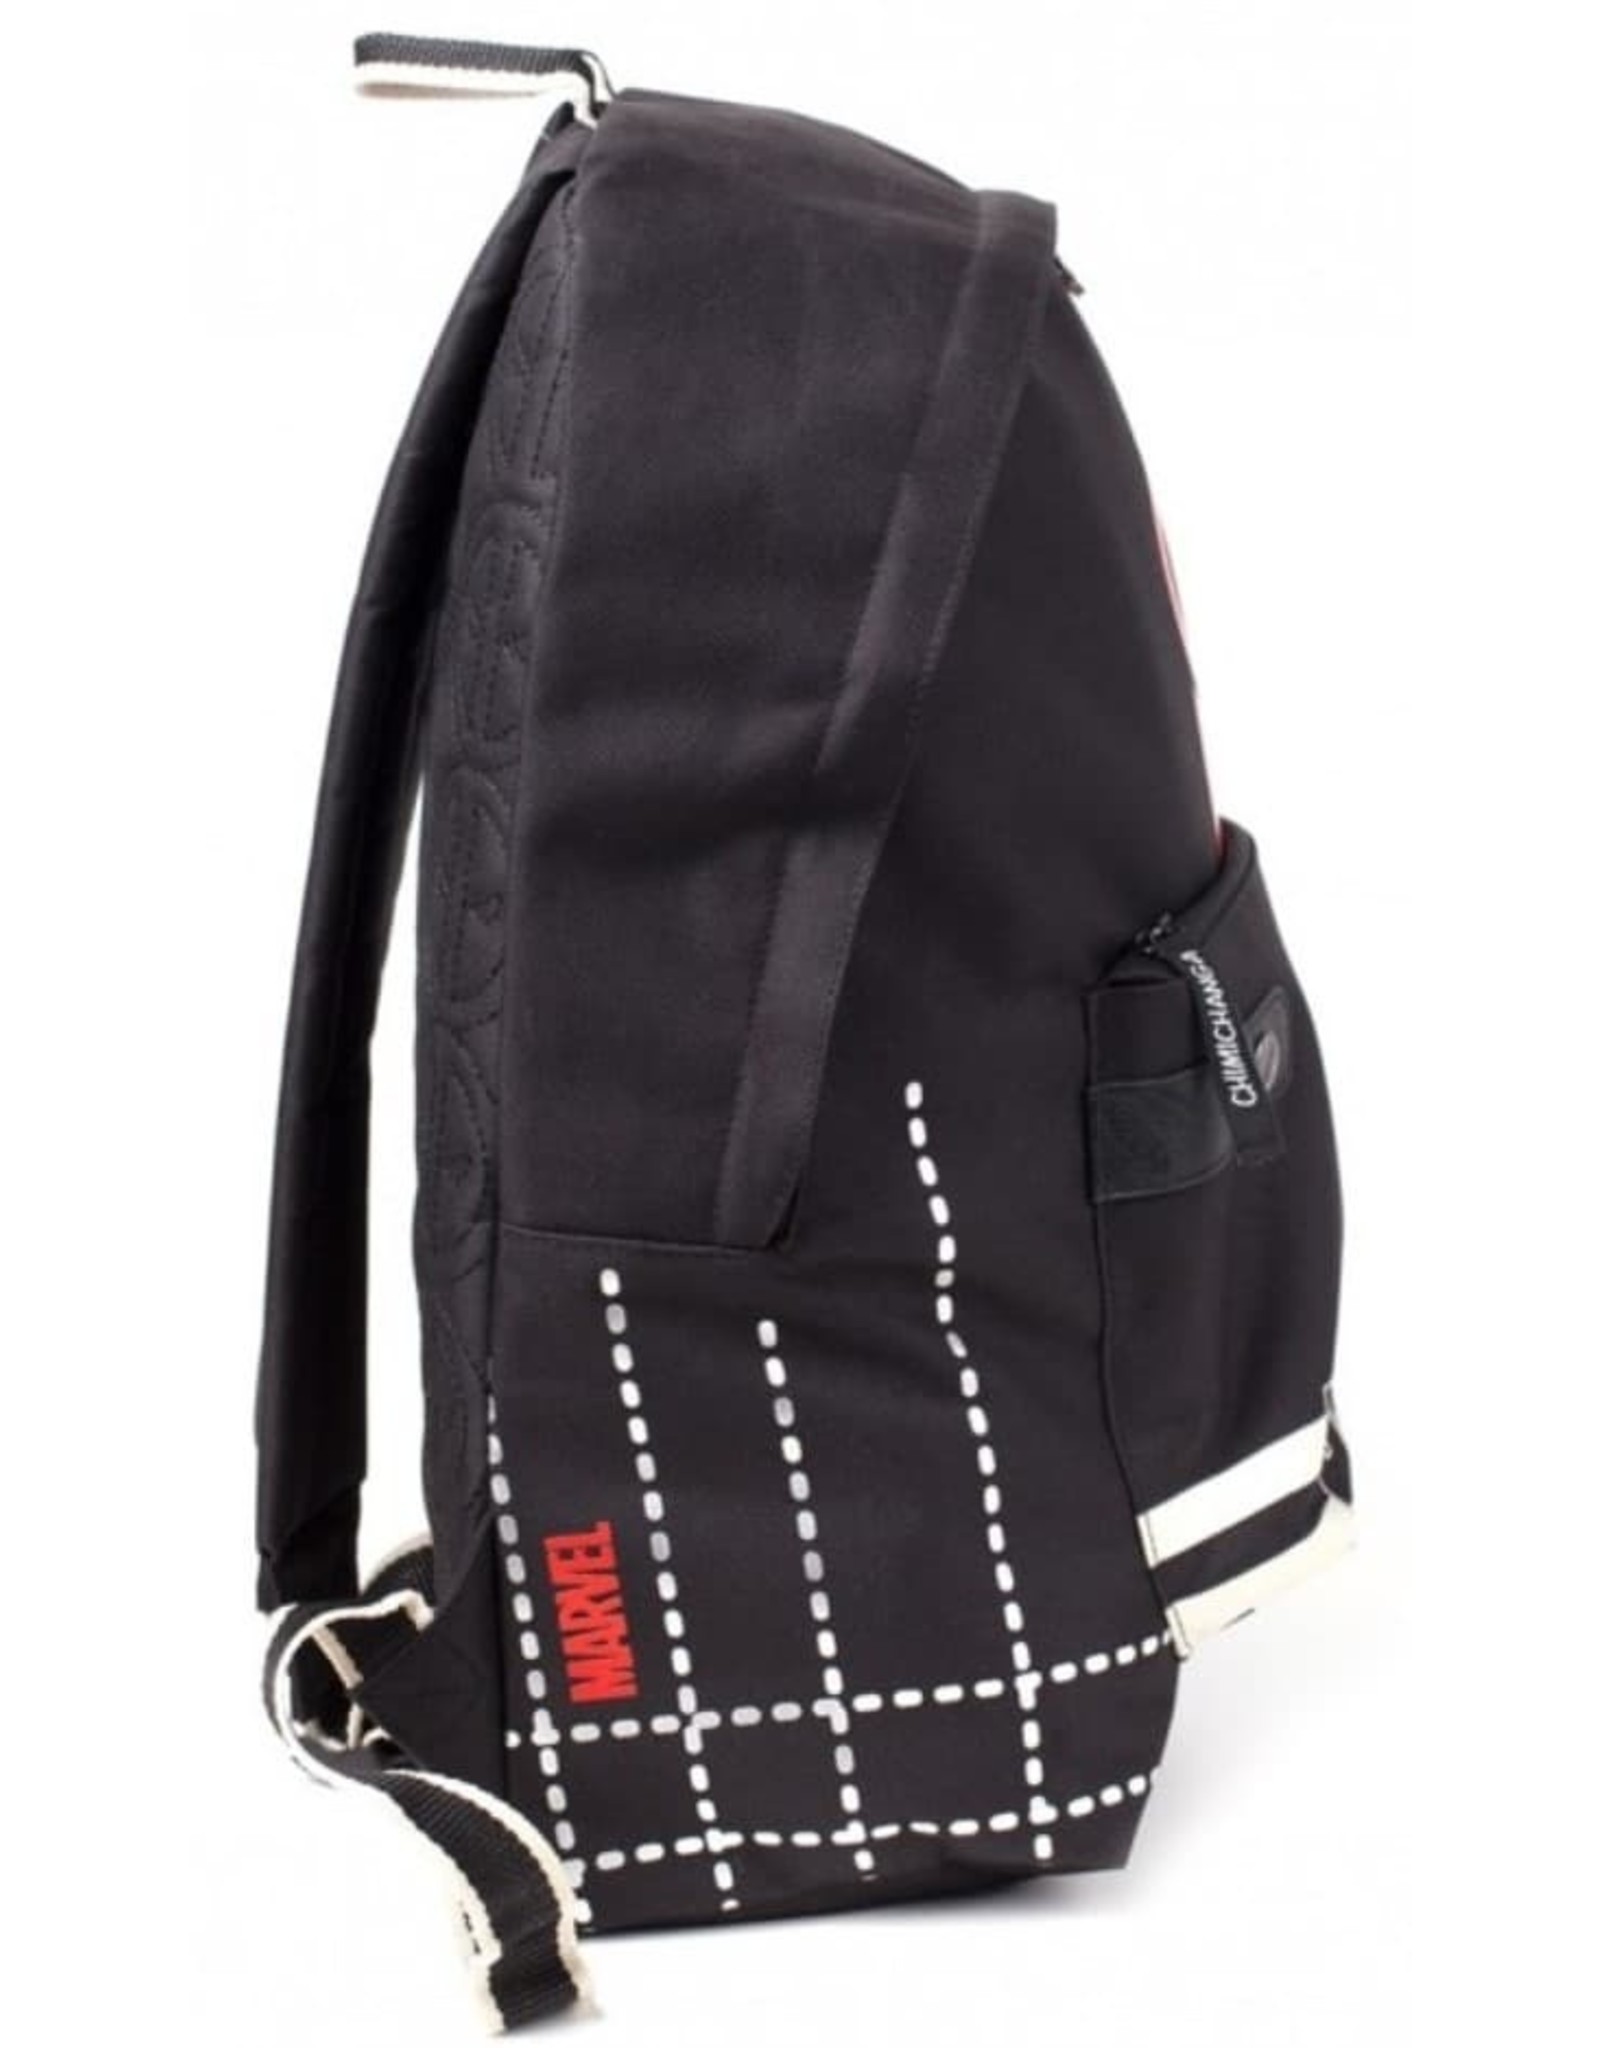 Marvel Marvel bags - Marvel Deadpool backpack